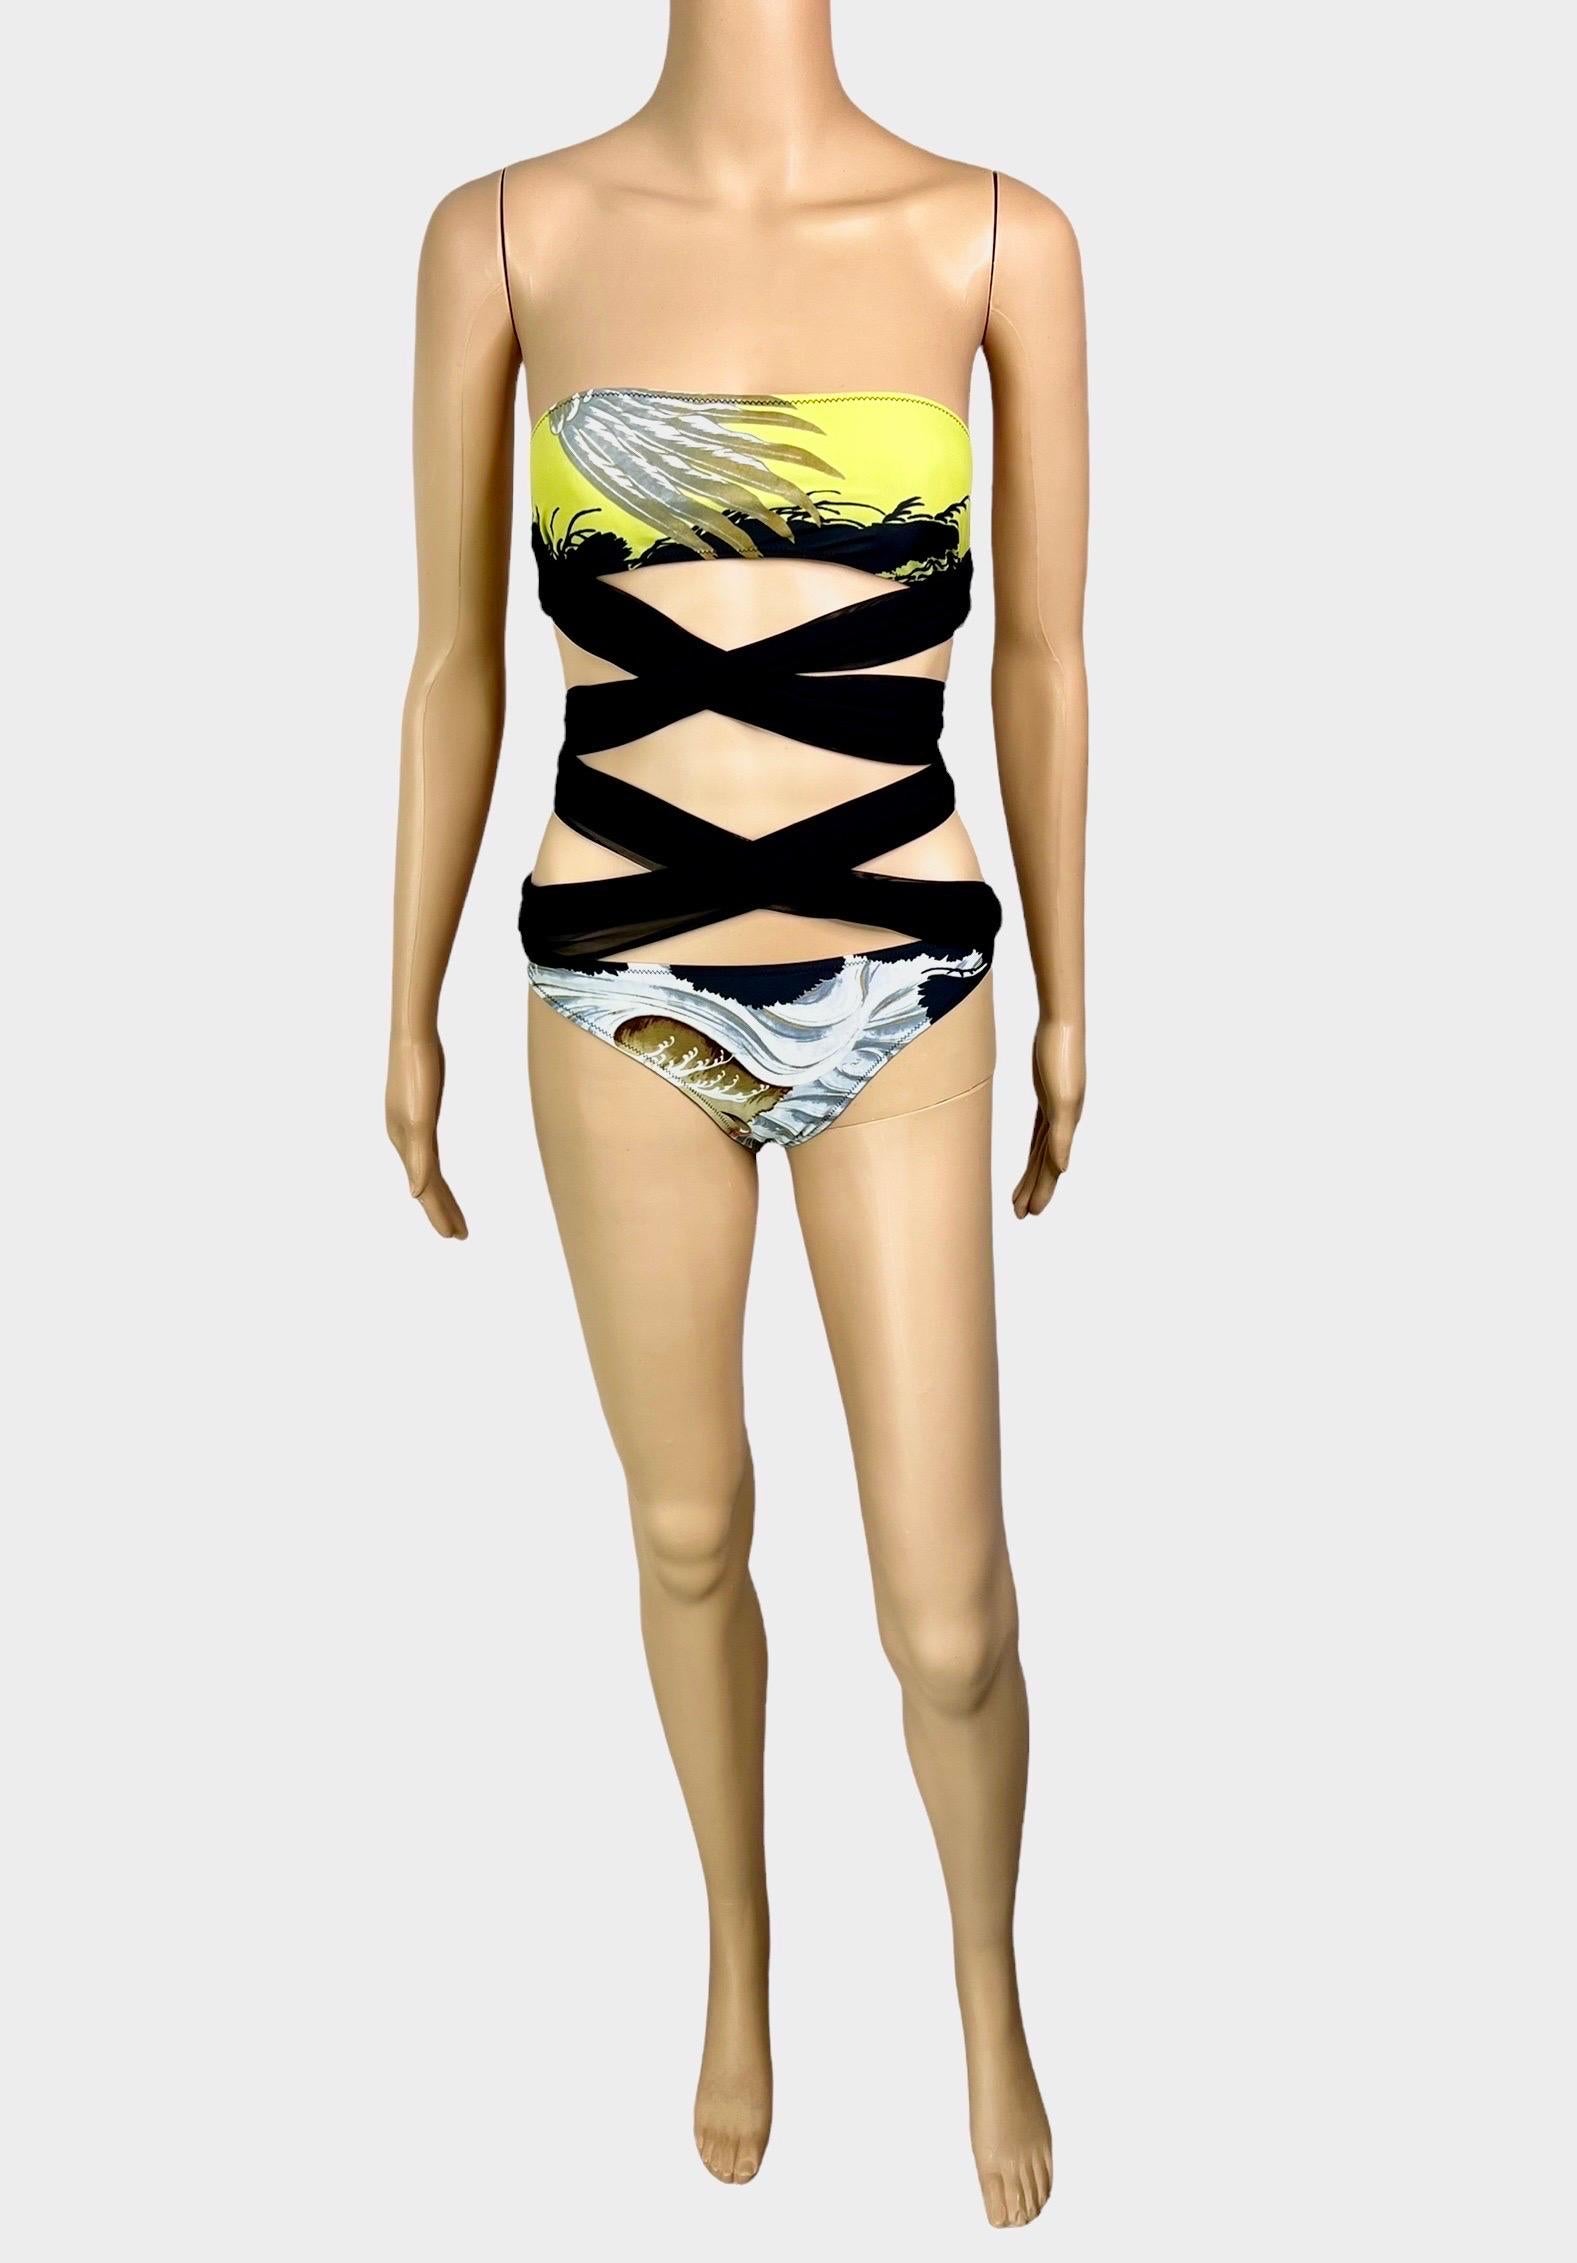 Jean Paul Gaultier Soleil Eagle Tattoo Bikini Swimwear Swimsuit 2 Piece Set For Sale 1